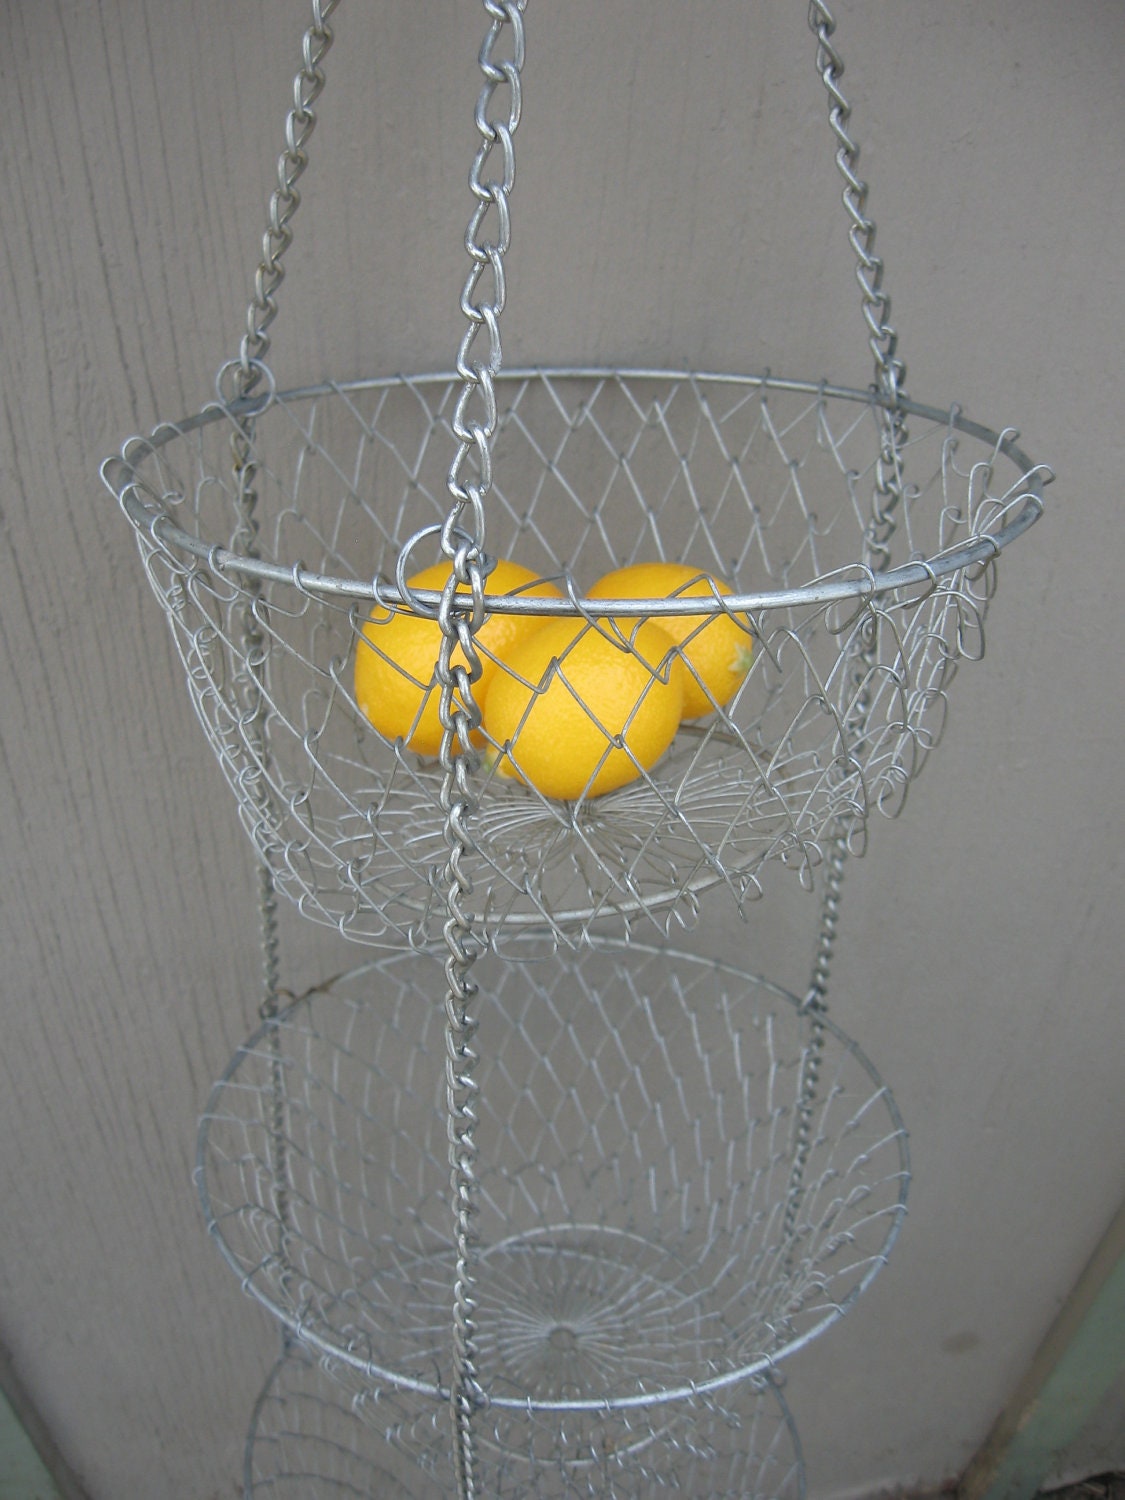 wire hanging baskets